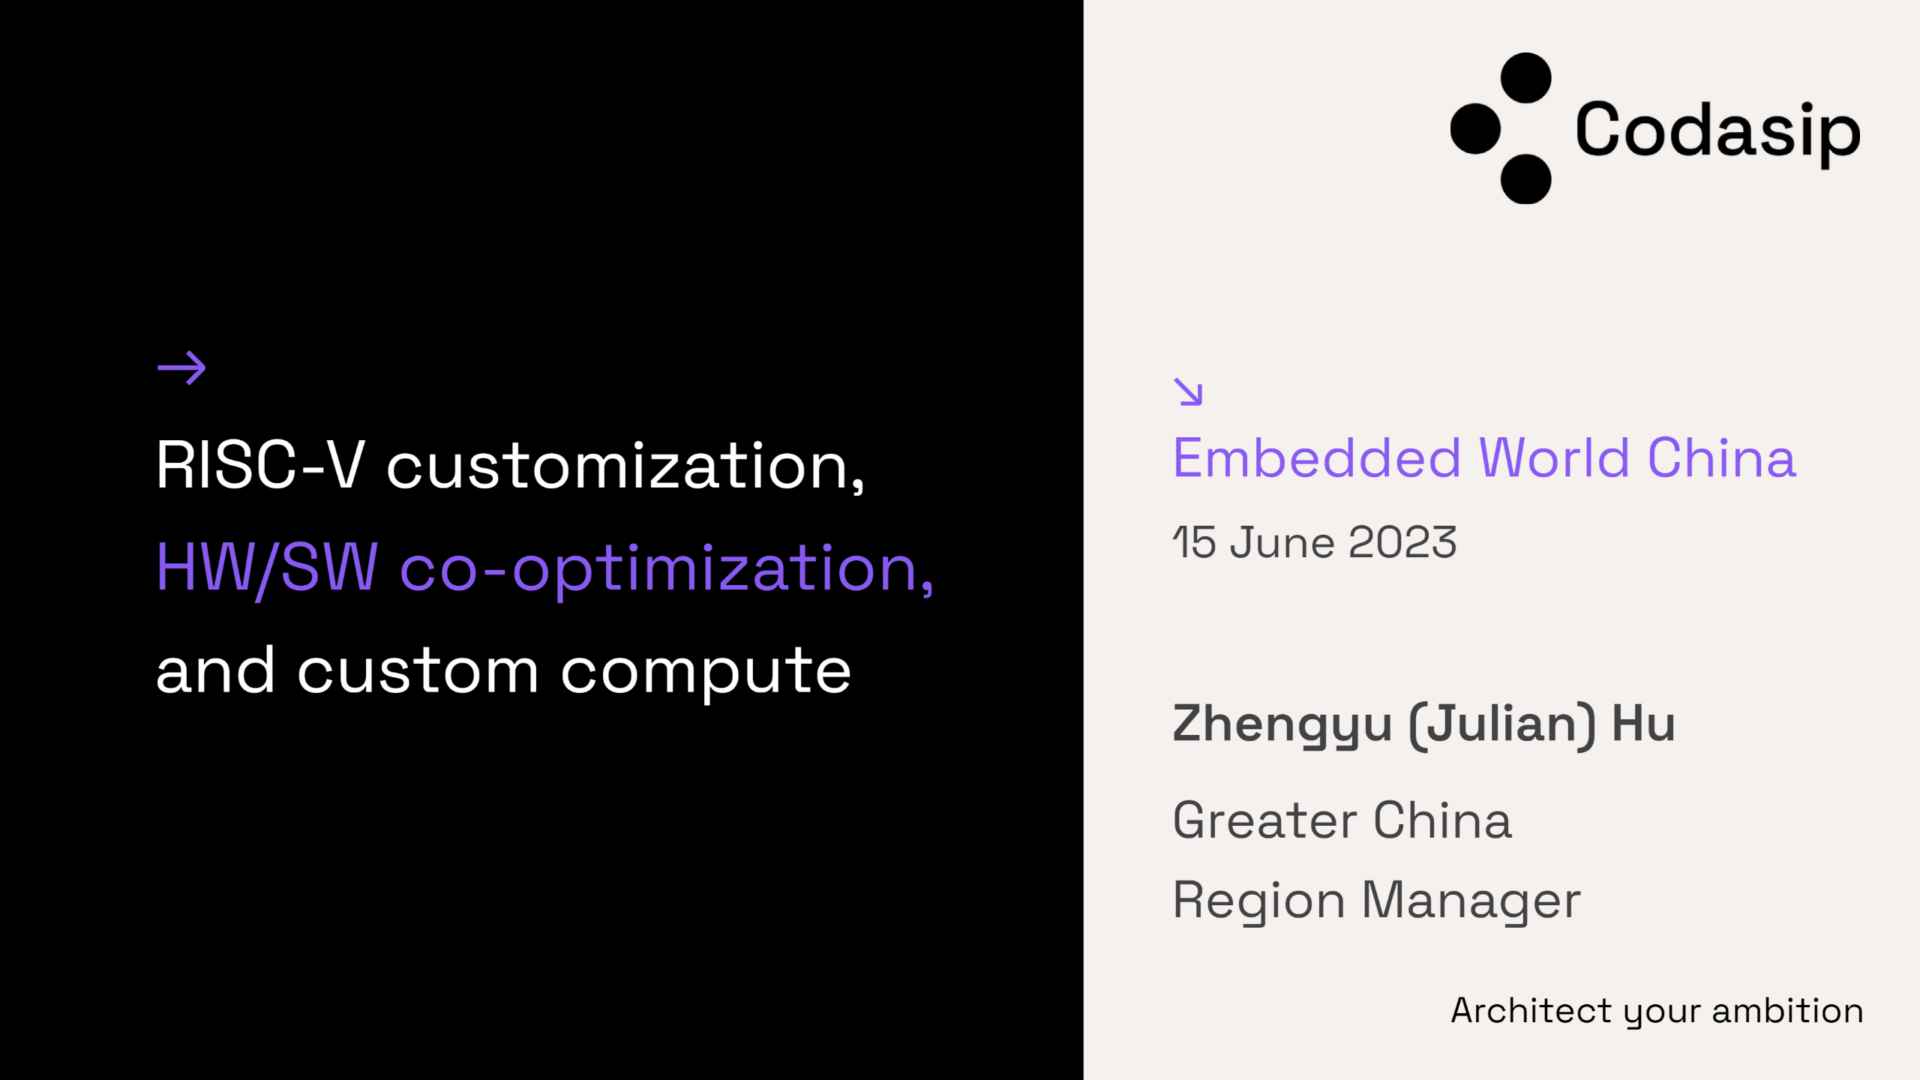 Embedded World China 2023 Codasip talk